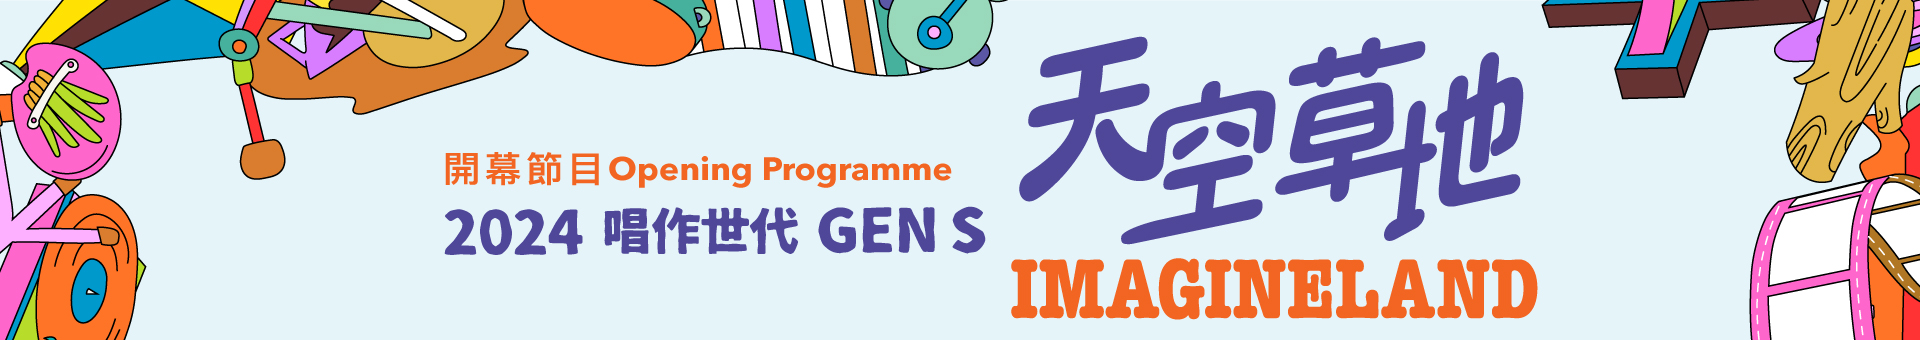 Opening Programme of Hong Kong Pop Culture Festival 2024 - ImagineLand